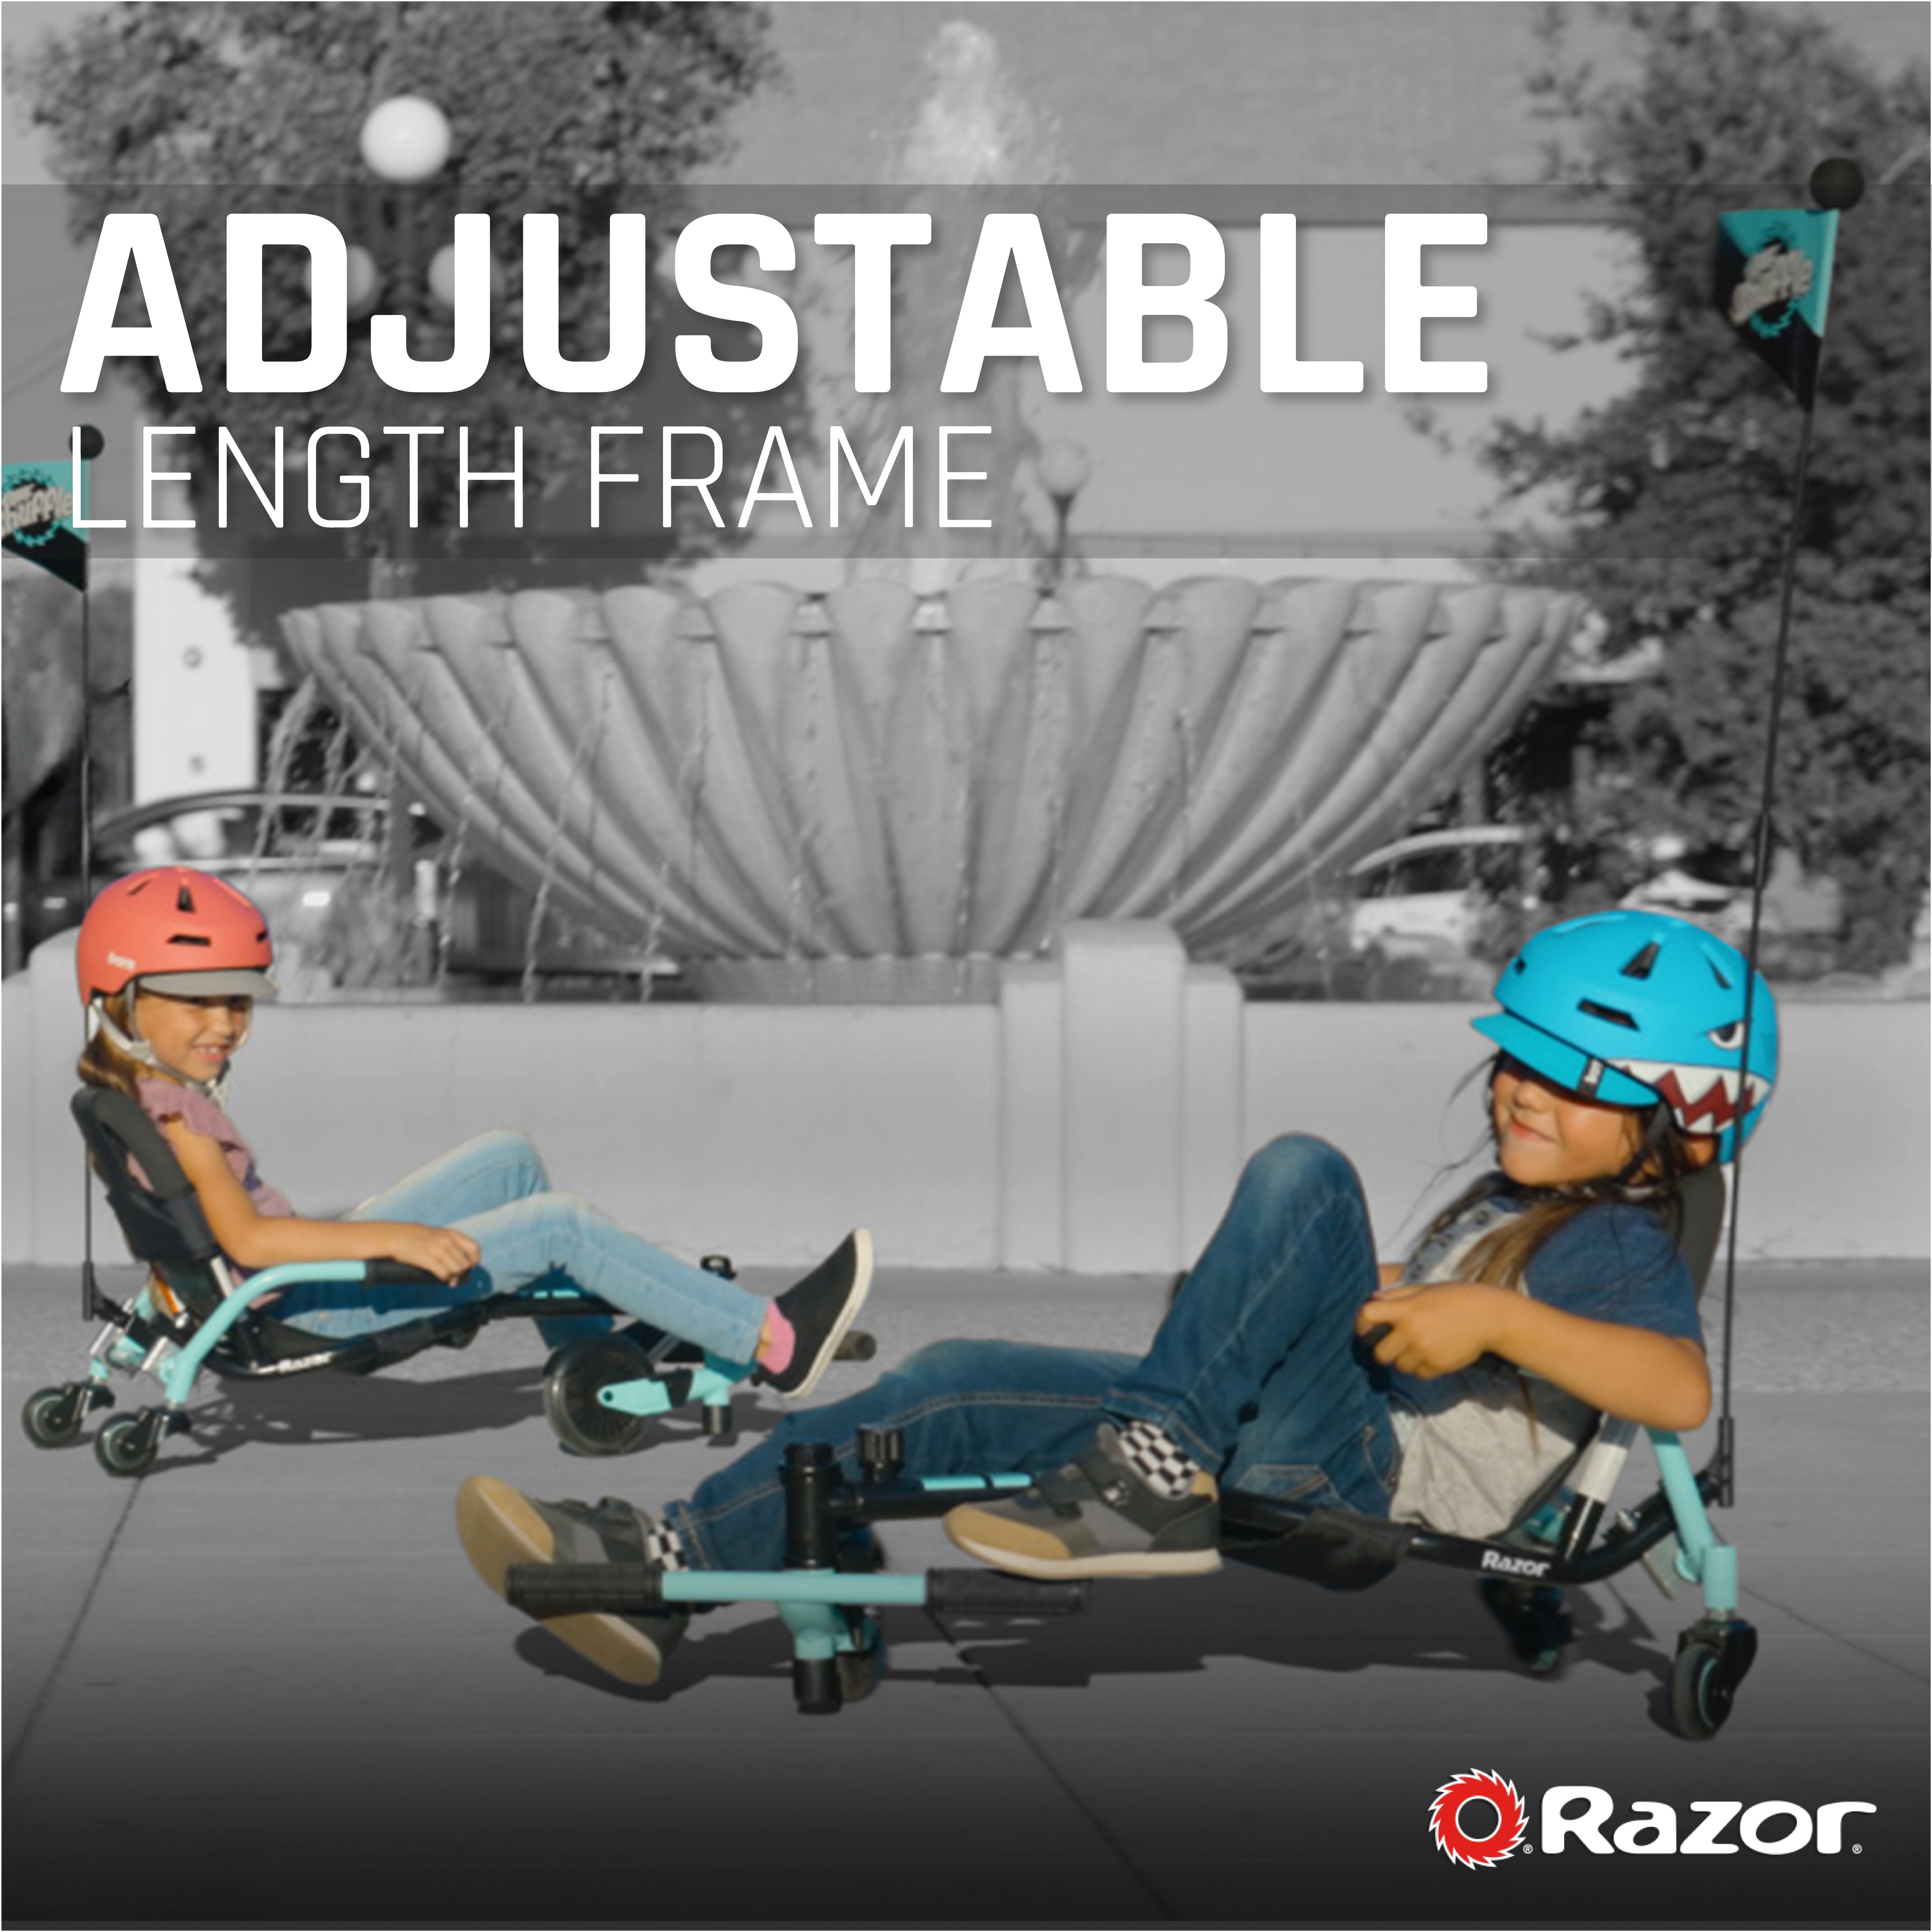 Razor Crazy Cart Shuffle - Kid-Powered Drifting Go-Kart for Ages 4